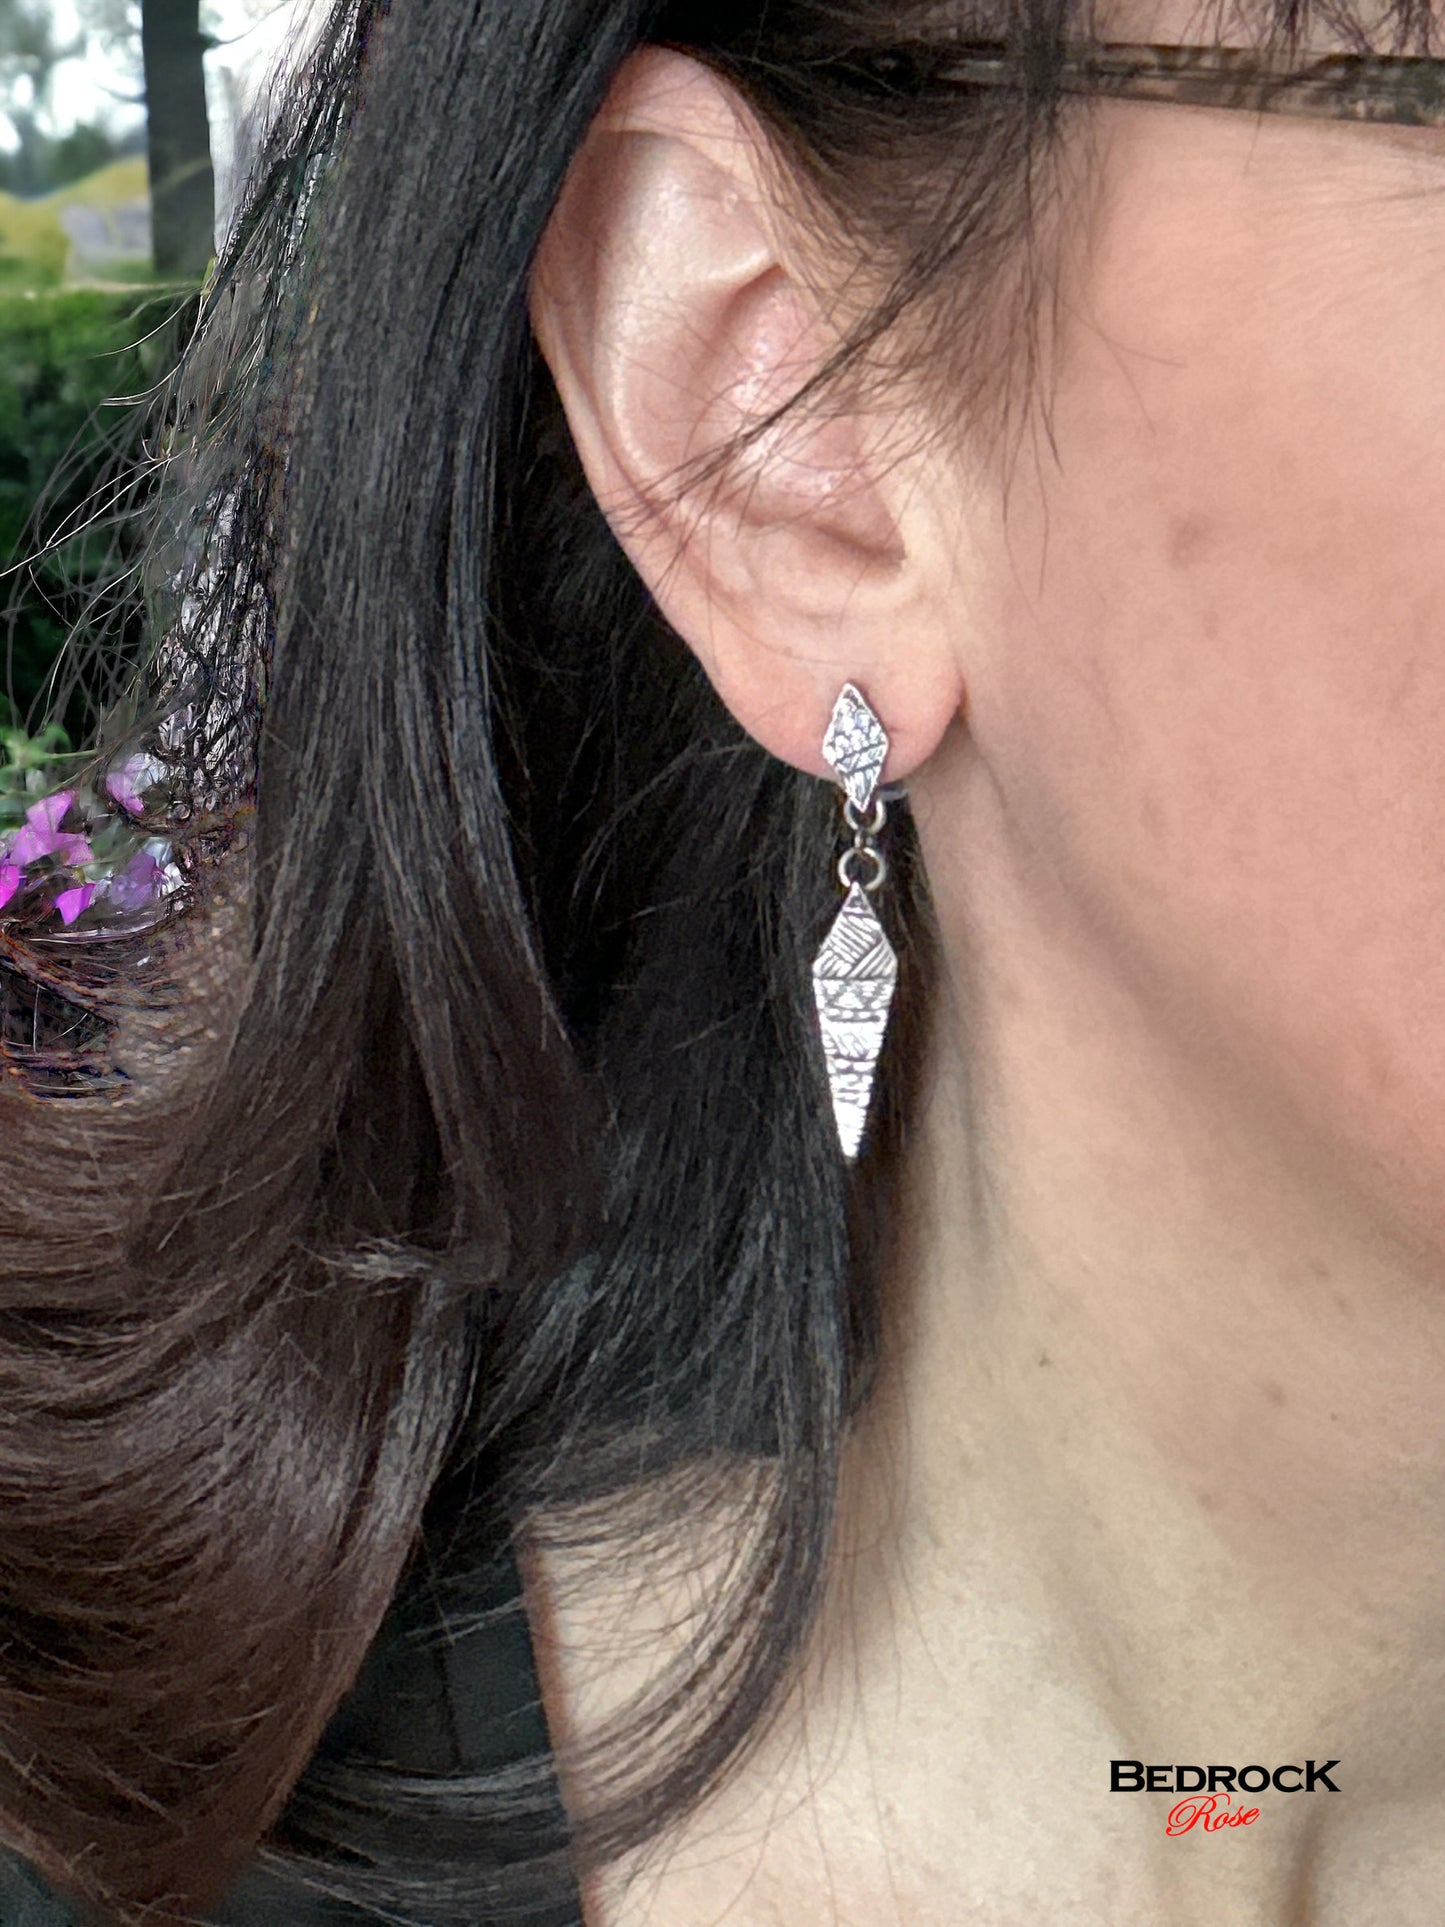 Silver Intricate Geo-Quilt Drop Earrings Bedrock Rose, Handcrafted Post Earrings